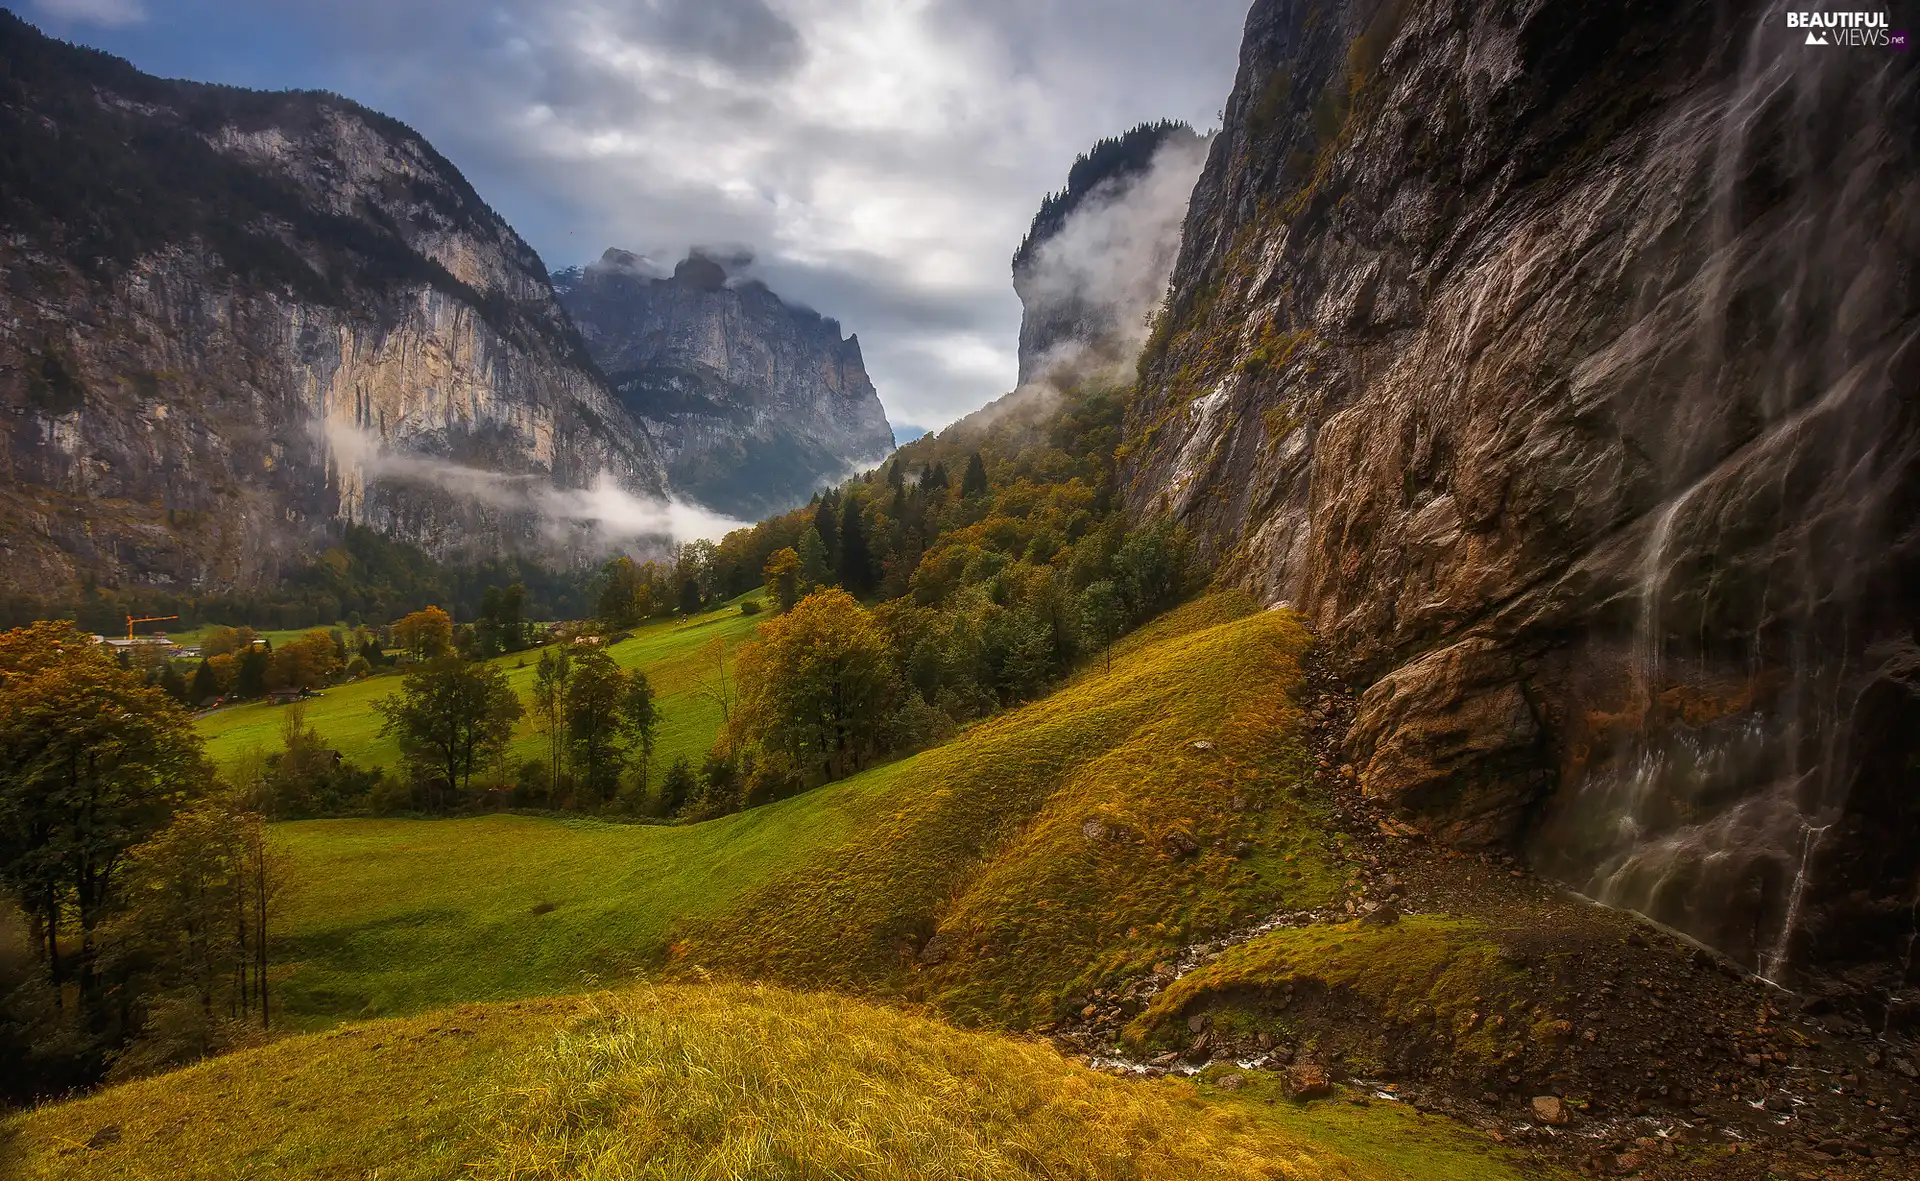 Berner Oberland, Switzerland, Lauterbrunnental Valley, autumn, grass, rocks, trees, viewes, Alps Mountains